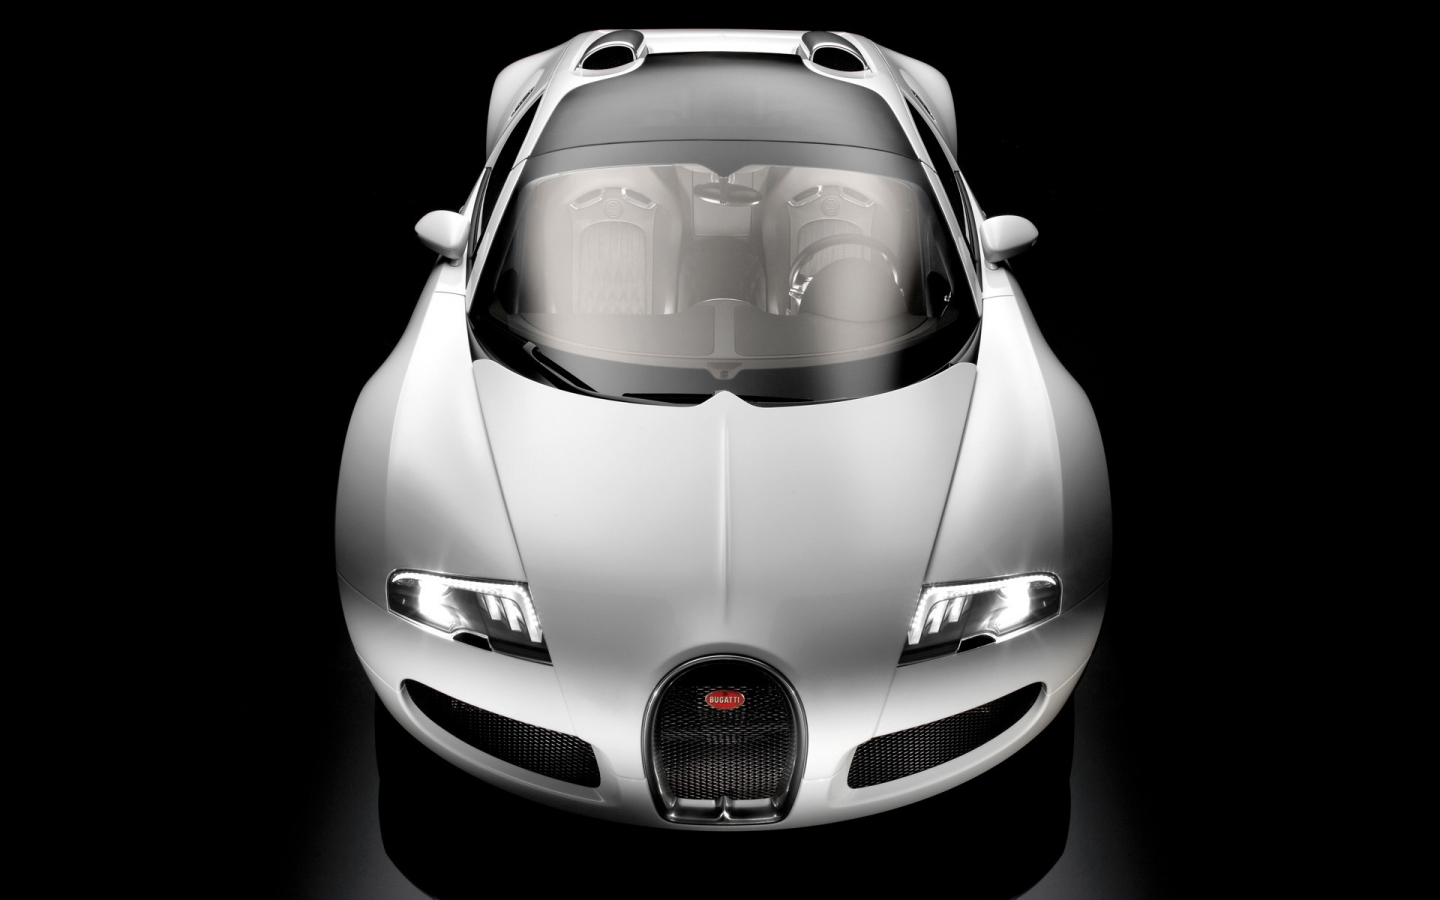 Bugatti Veyron 16.4 Grand Sport 2009 - Front Top Studio for 1440 x 900 widescreen resolution